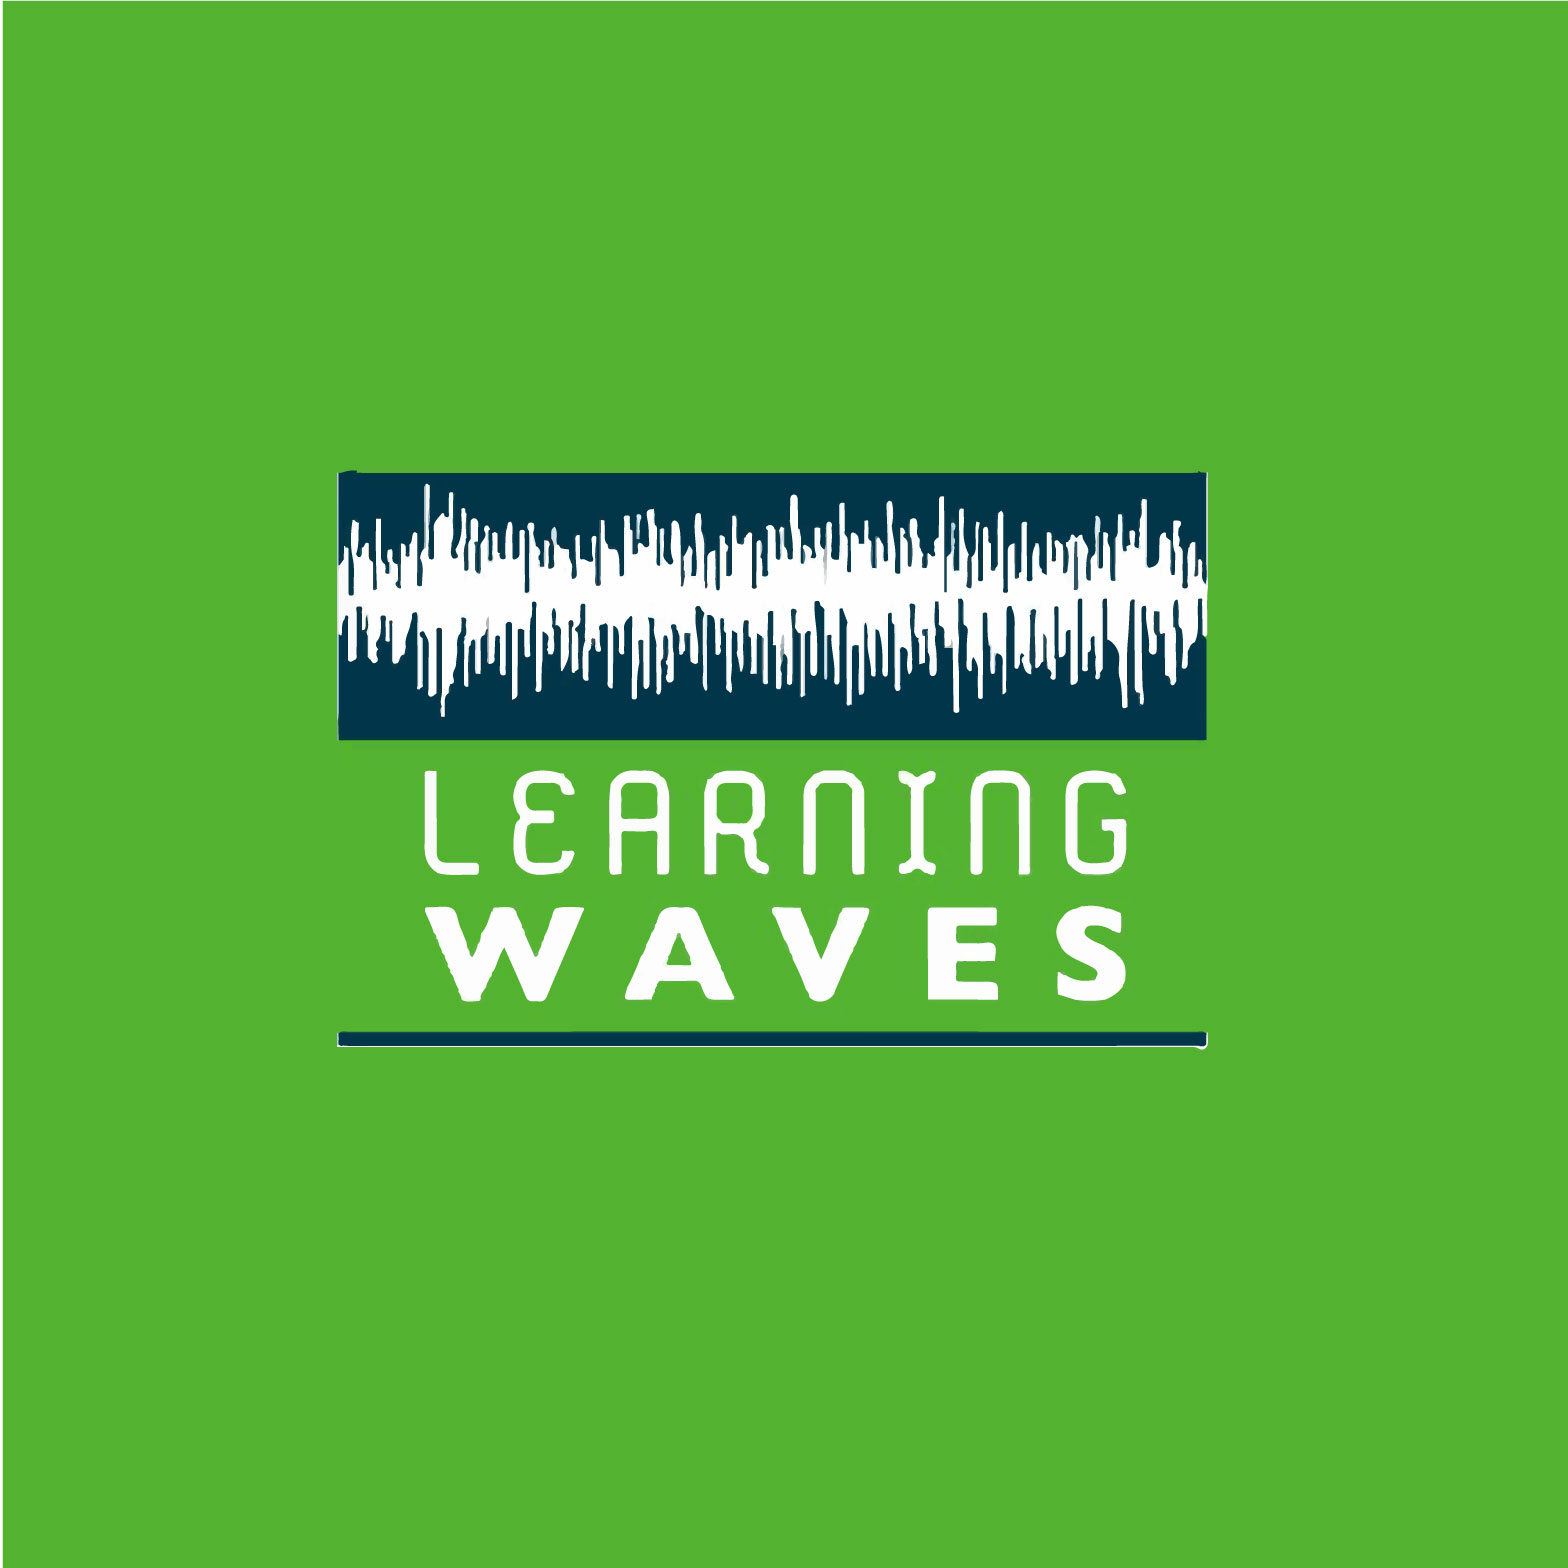 Learning-waves.jpg